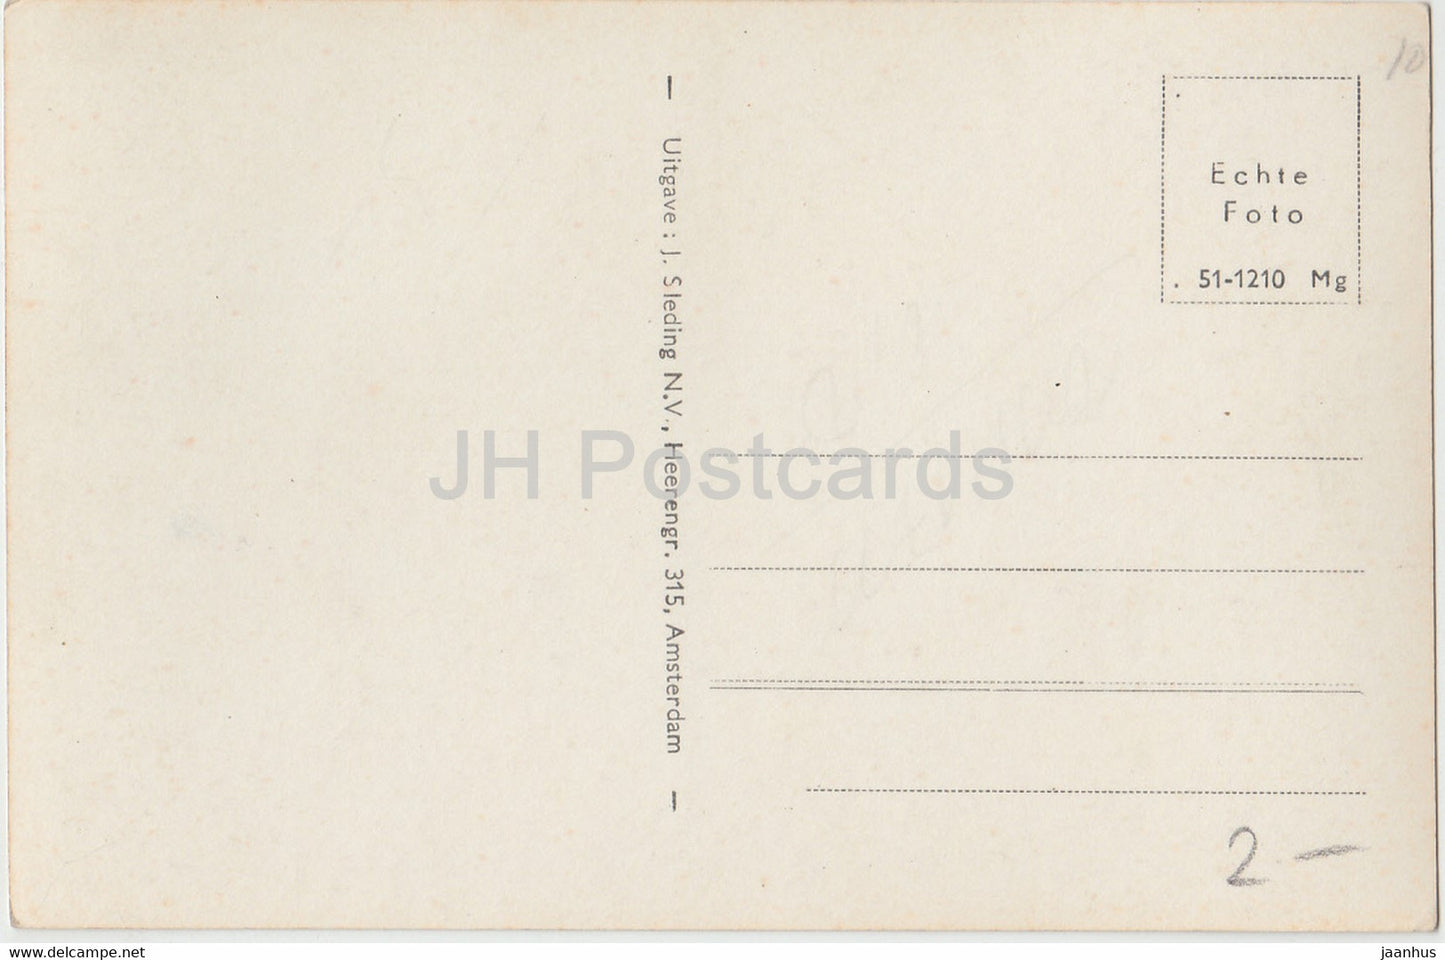 Den Haag - Paleis Noordeinde - carte postale ancienne - Pays-Bas - inutilisée